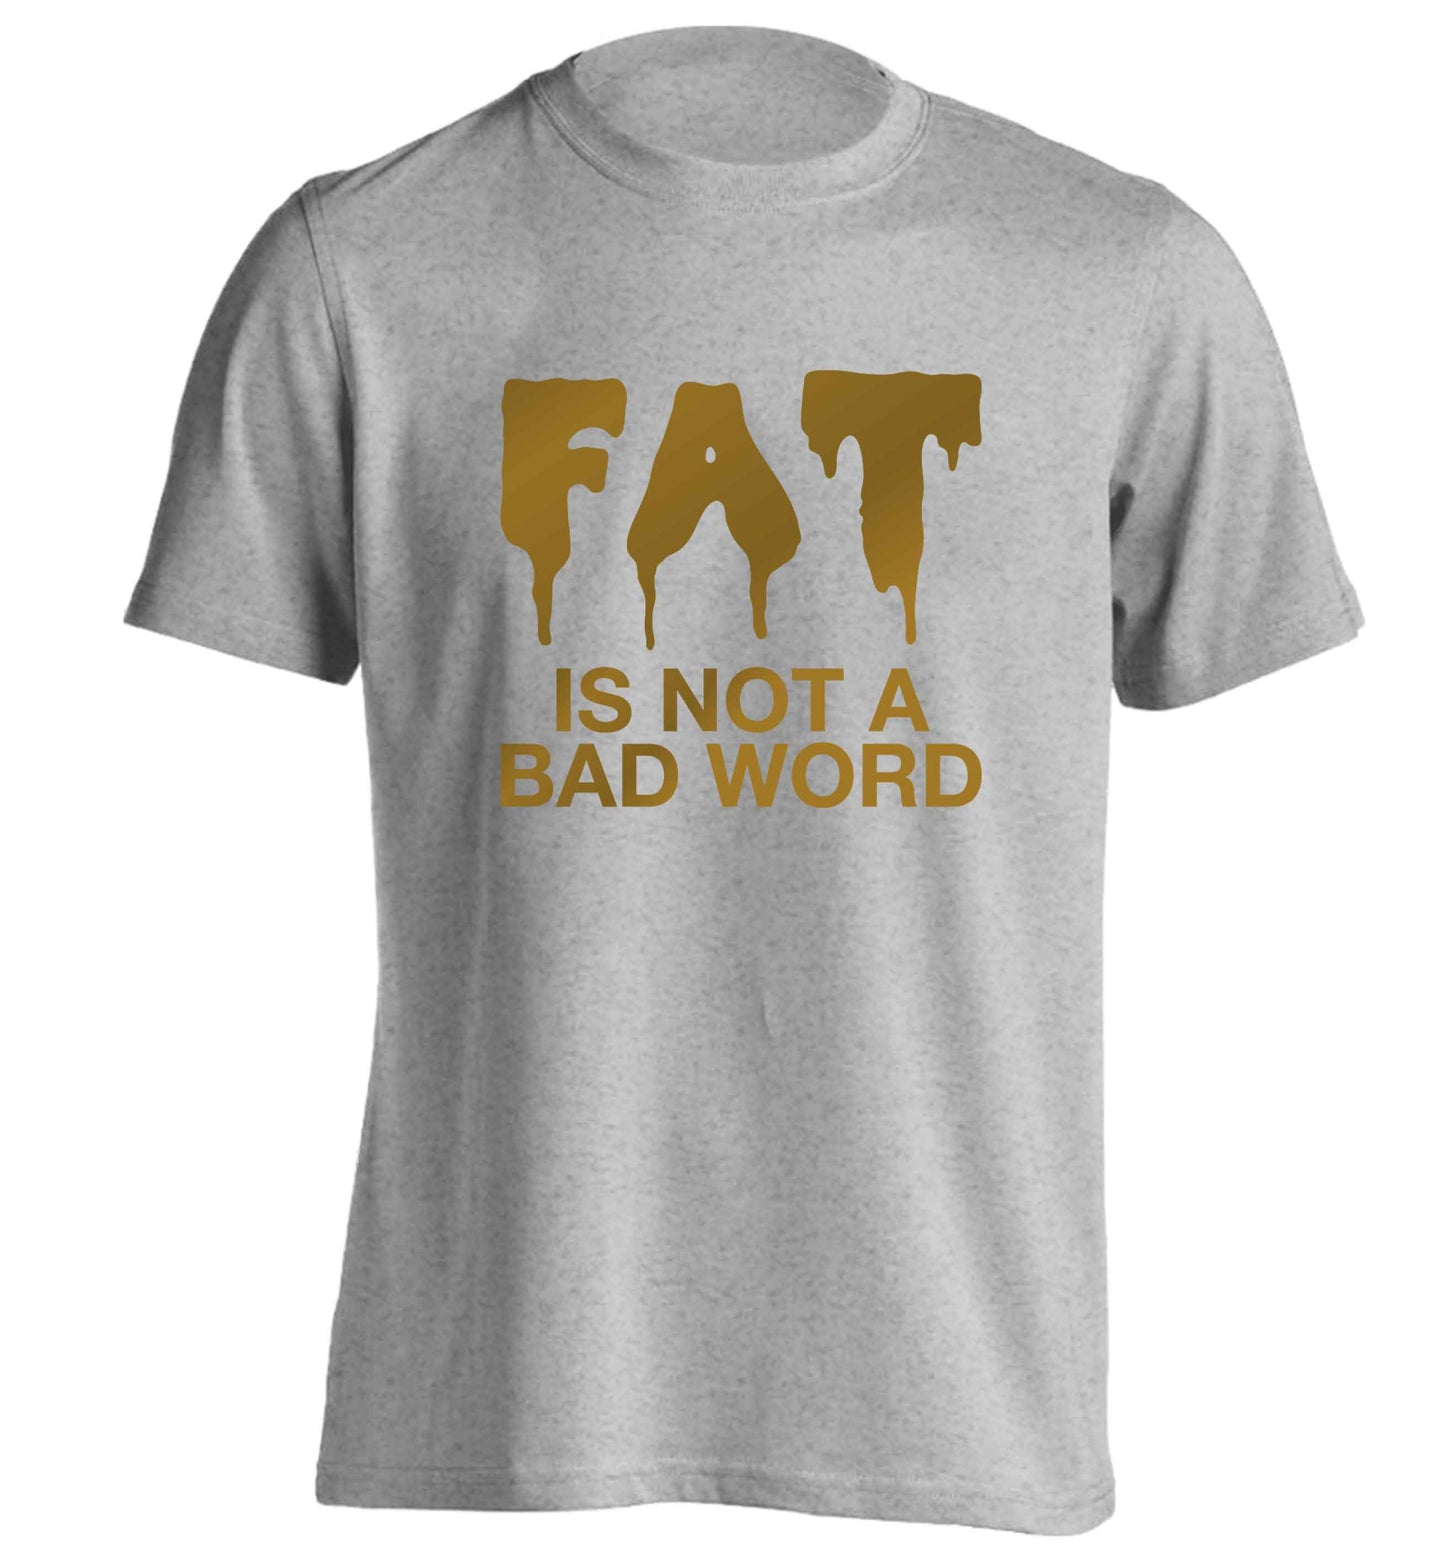 Fat is not a bad word adults unisex grey Tshirt 2XL